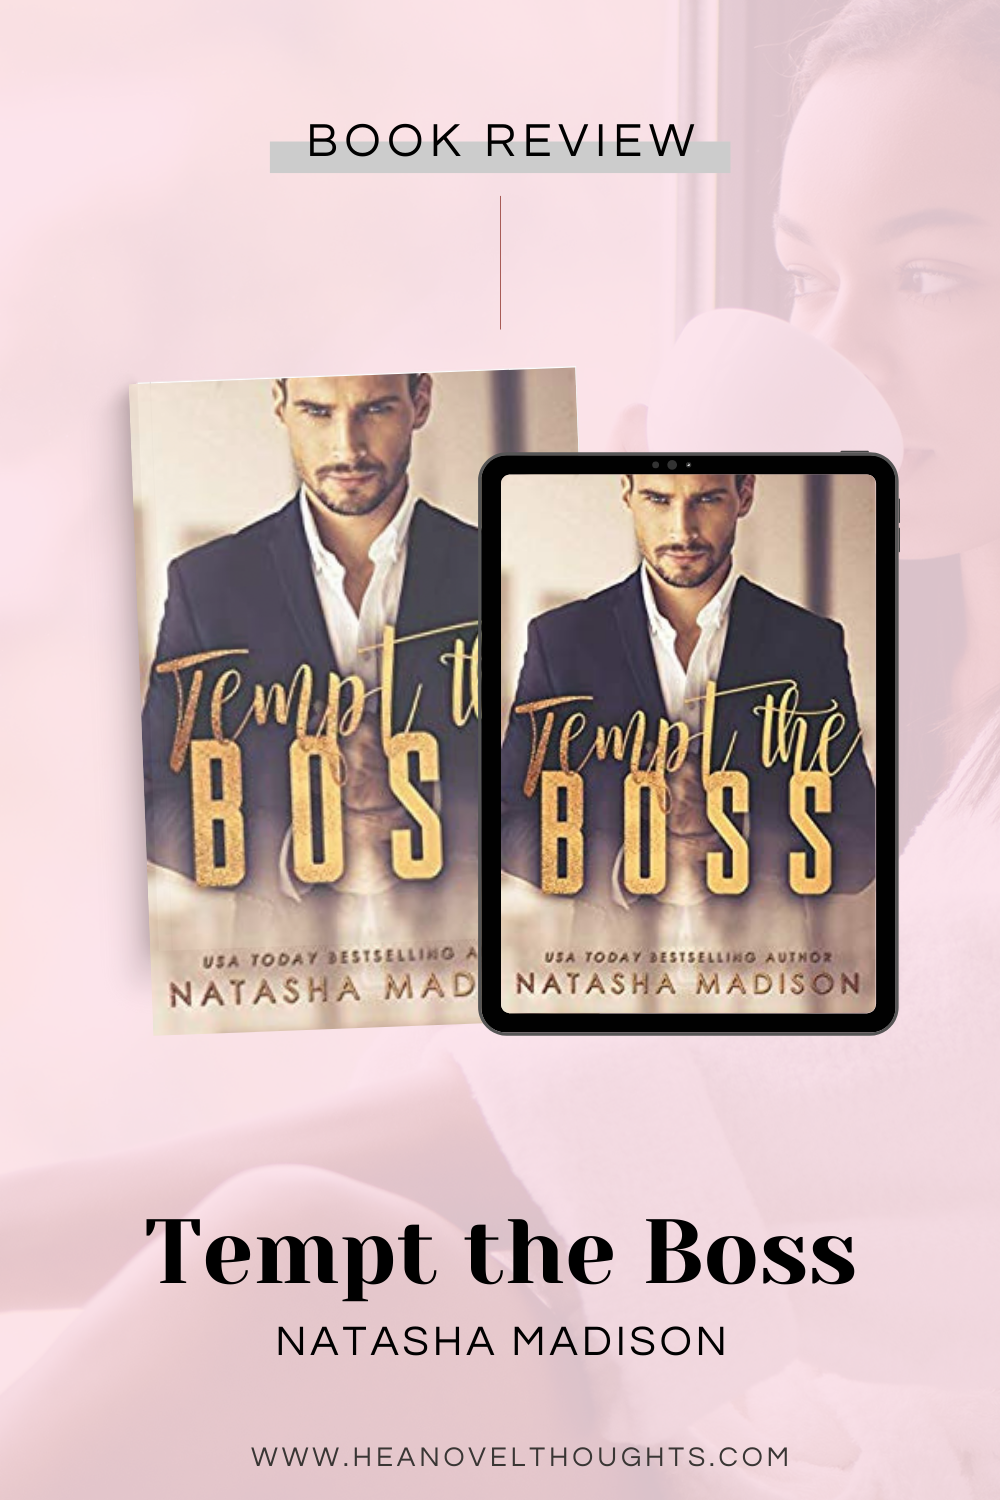 Tempt the Boss by Natasha Madison